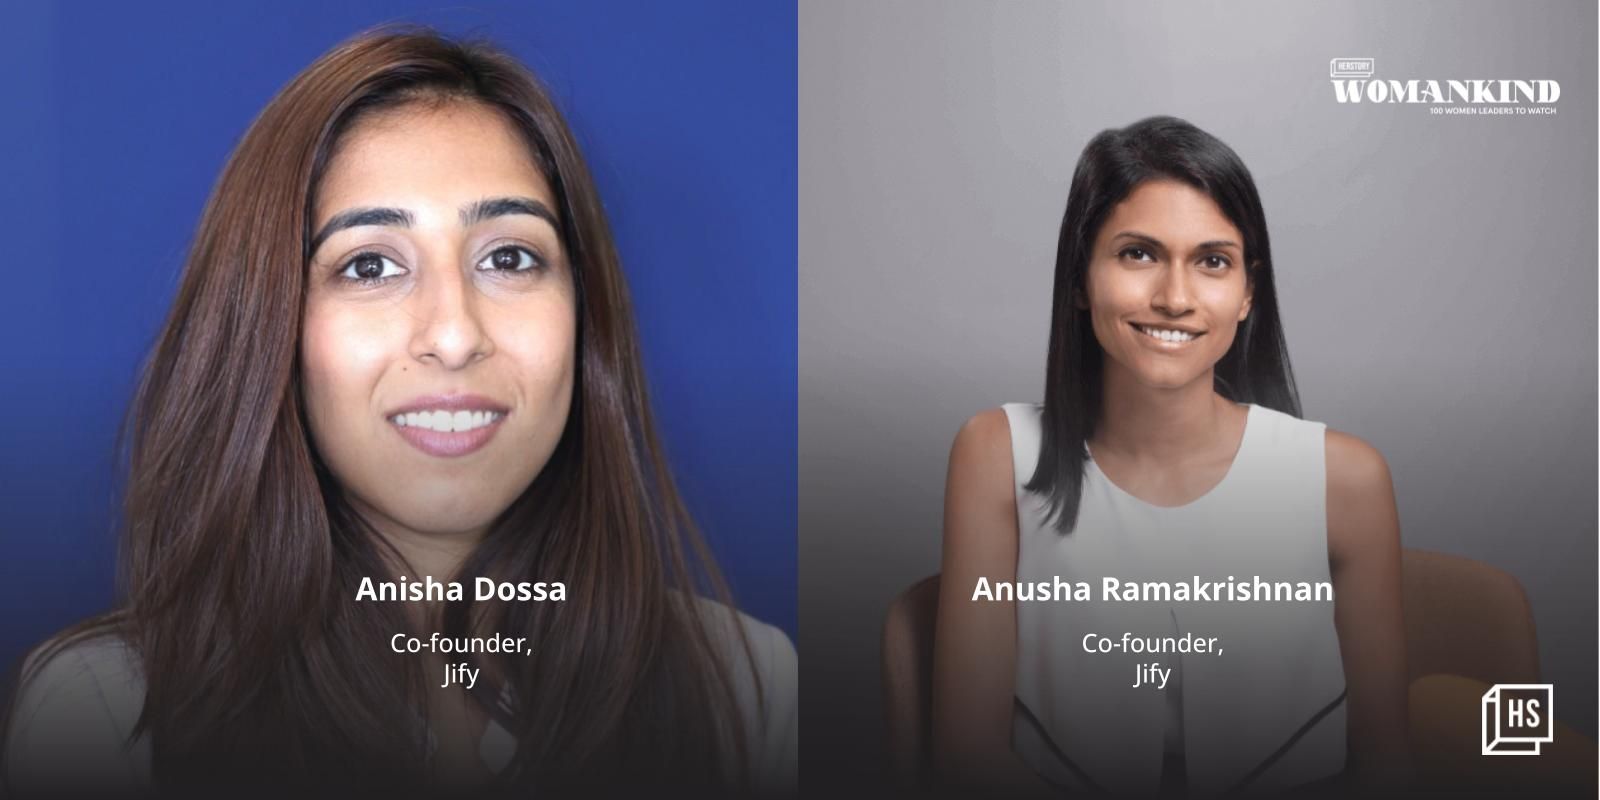 [100 Emerging Women Leaders] Meet the women entrepreneurs championing financial inclusion with fintech startup Jify